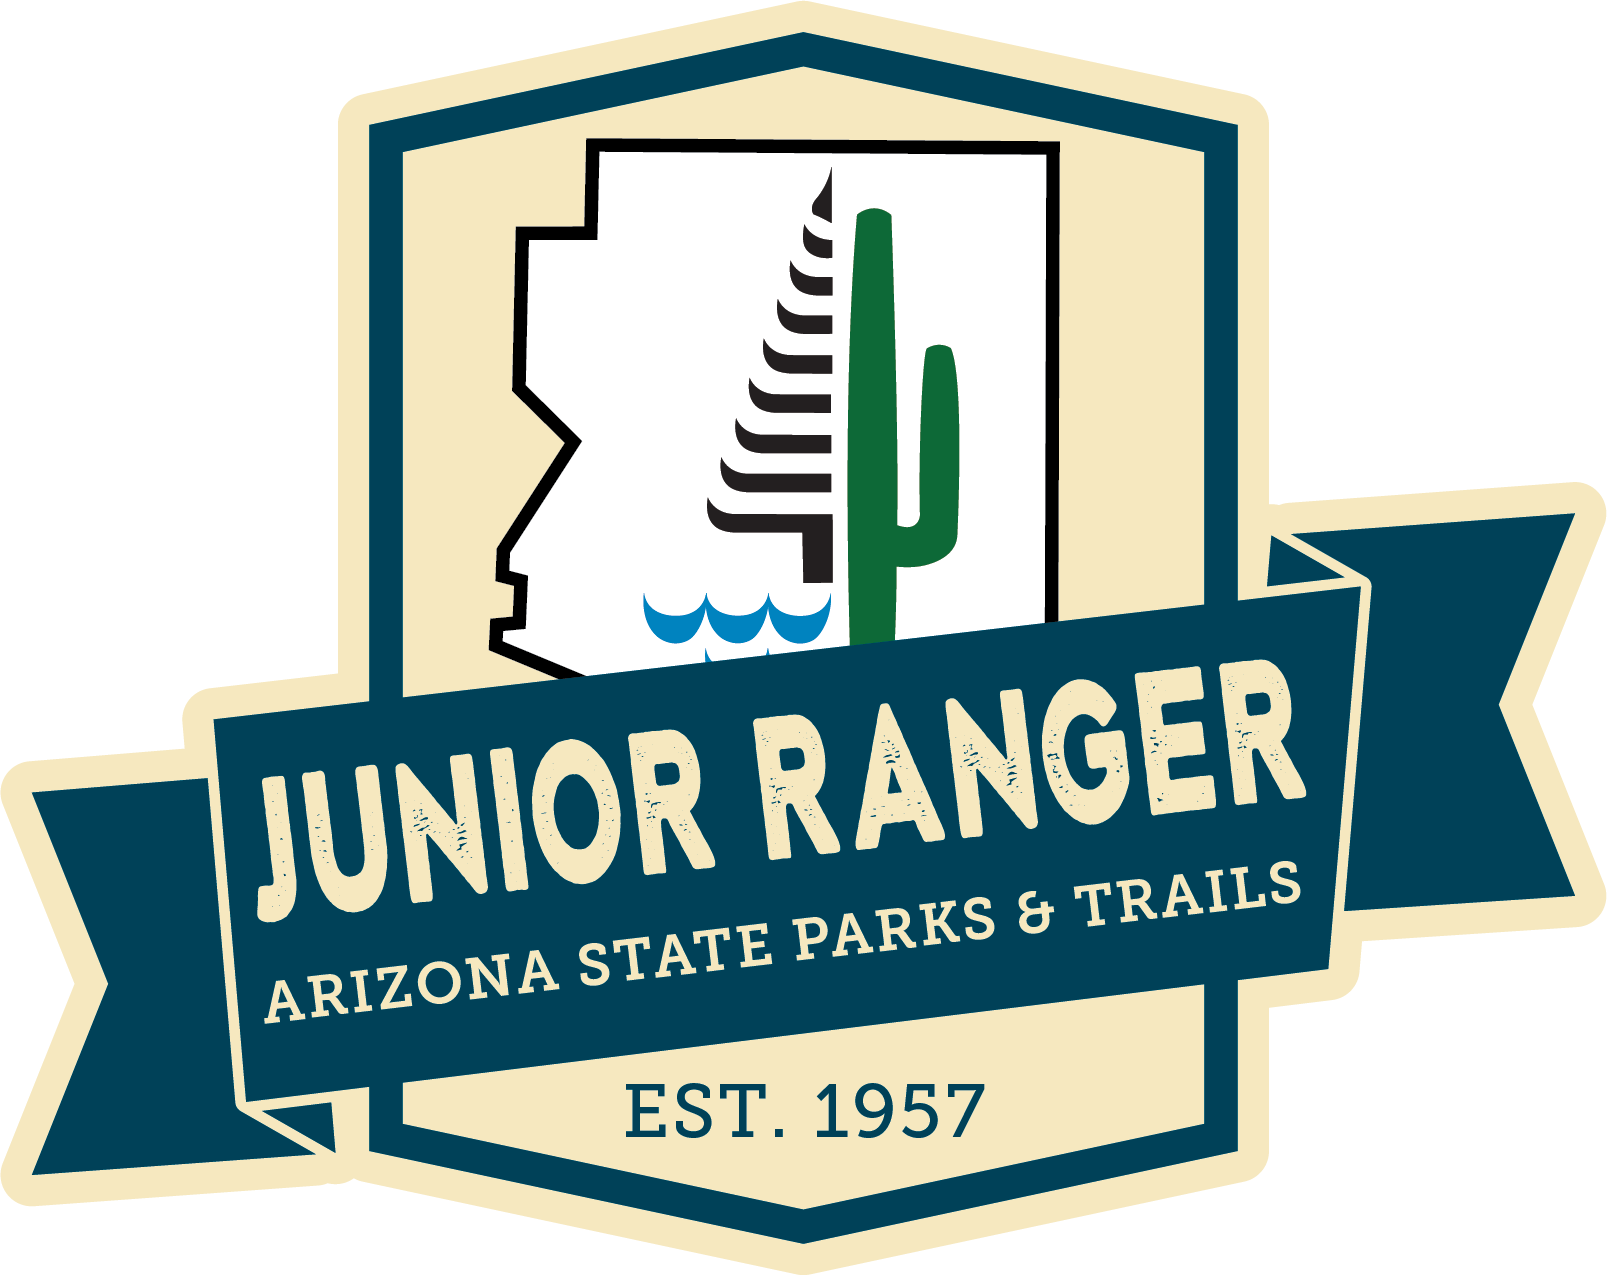 Junior Ranger program logo at River Island State Park